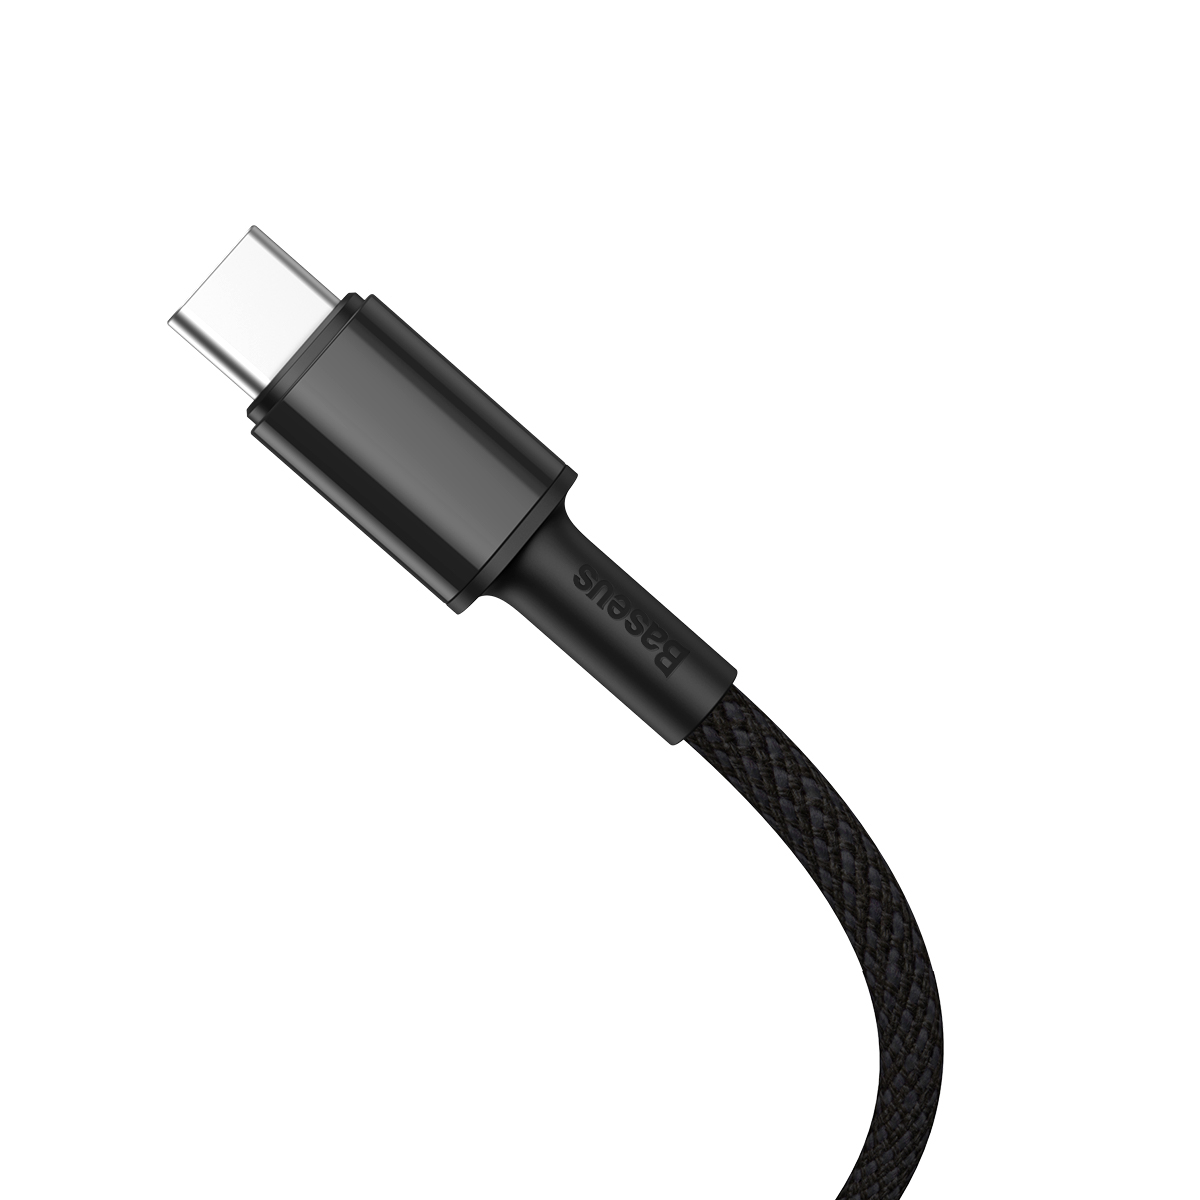 Baseus USB-C till USB-C kabel, snabbladdning, 5A, 1m, svart